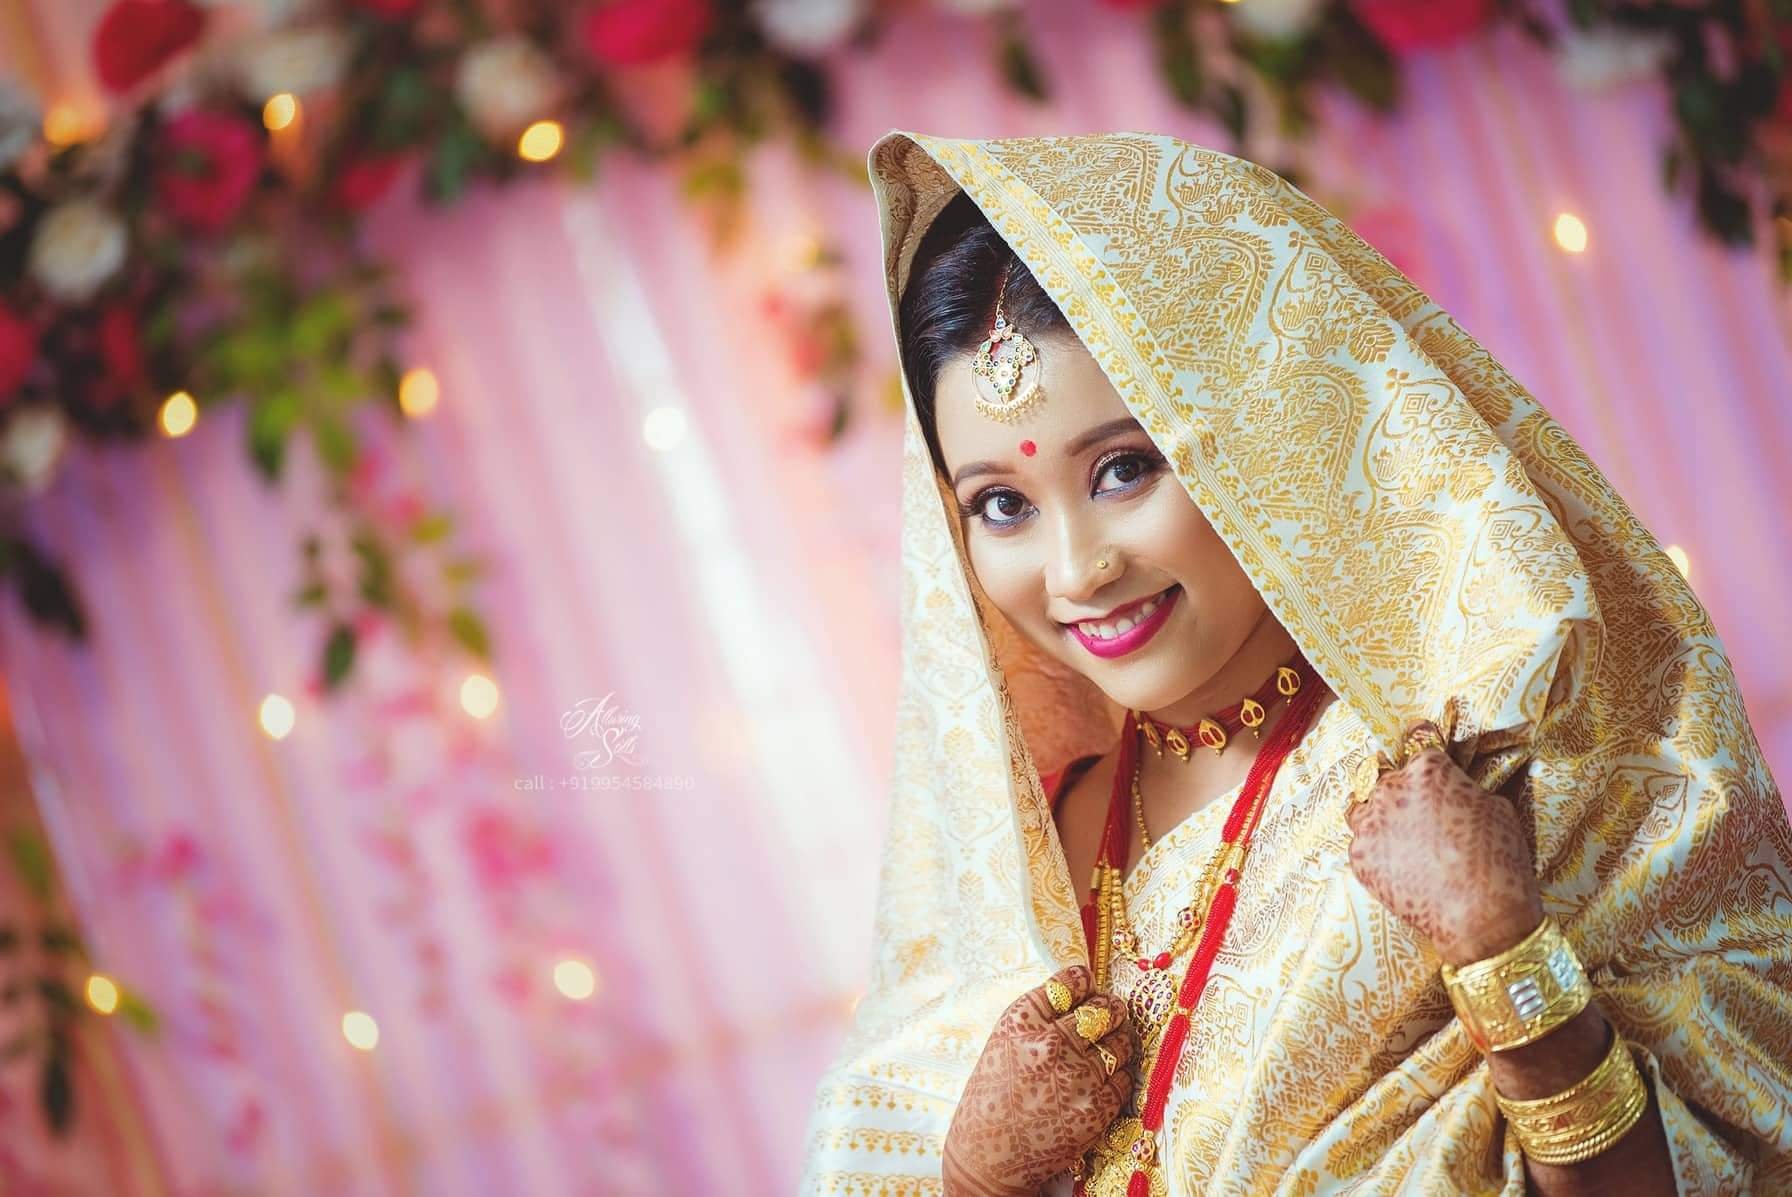 Assamese bride flaunting the ceremonial white paat mekhela chador